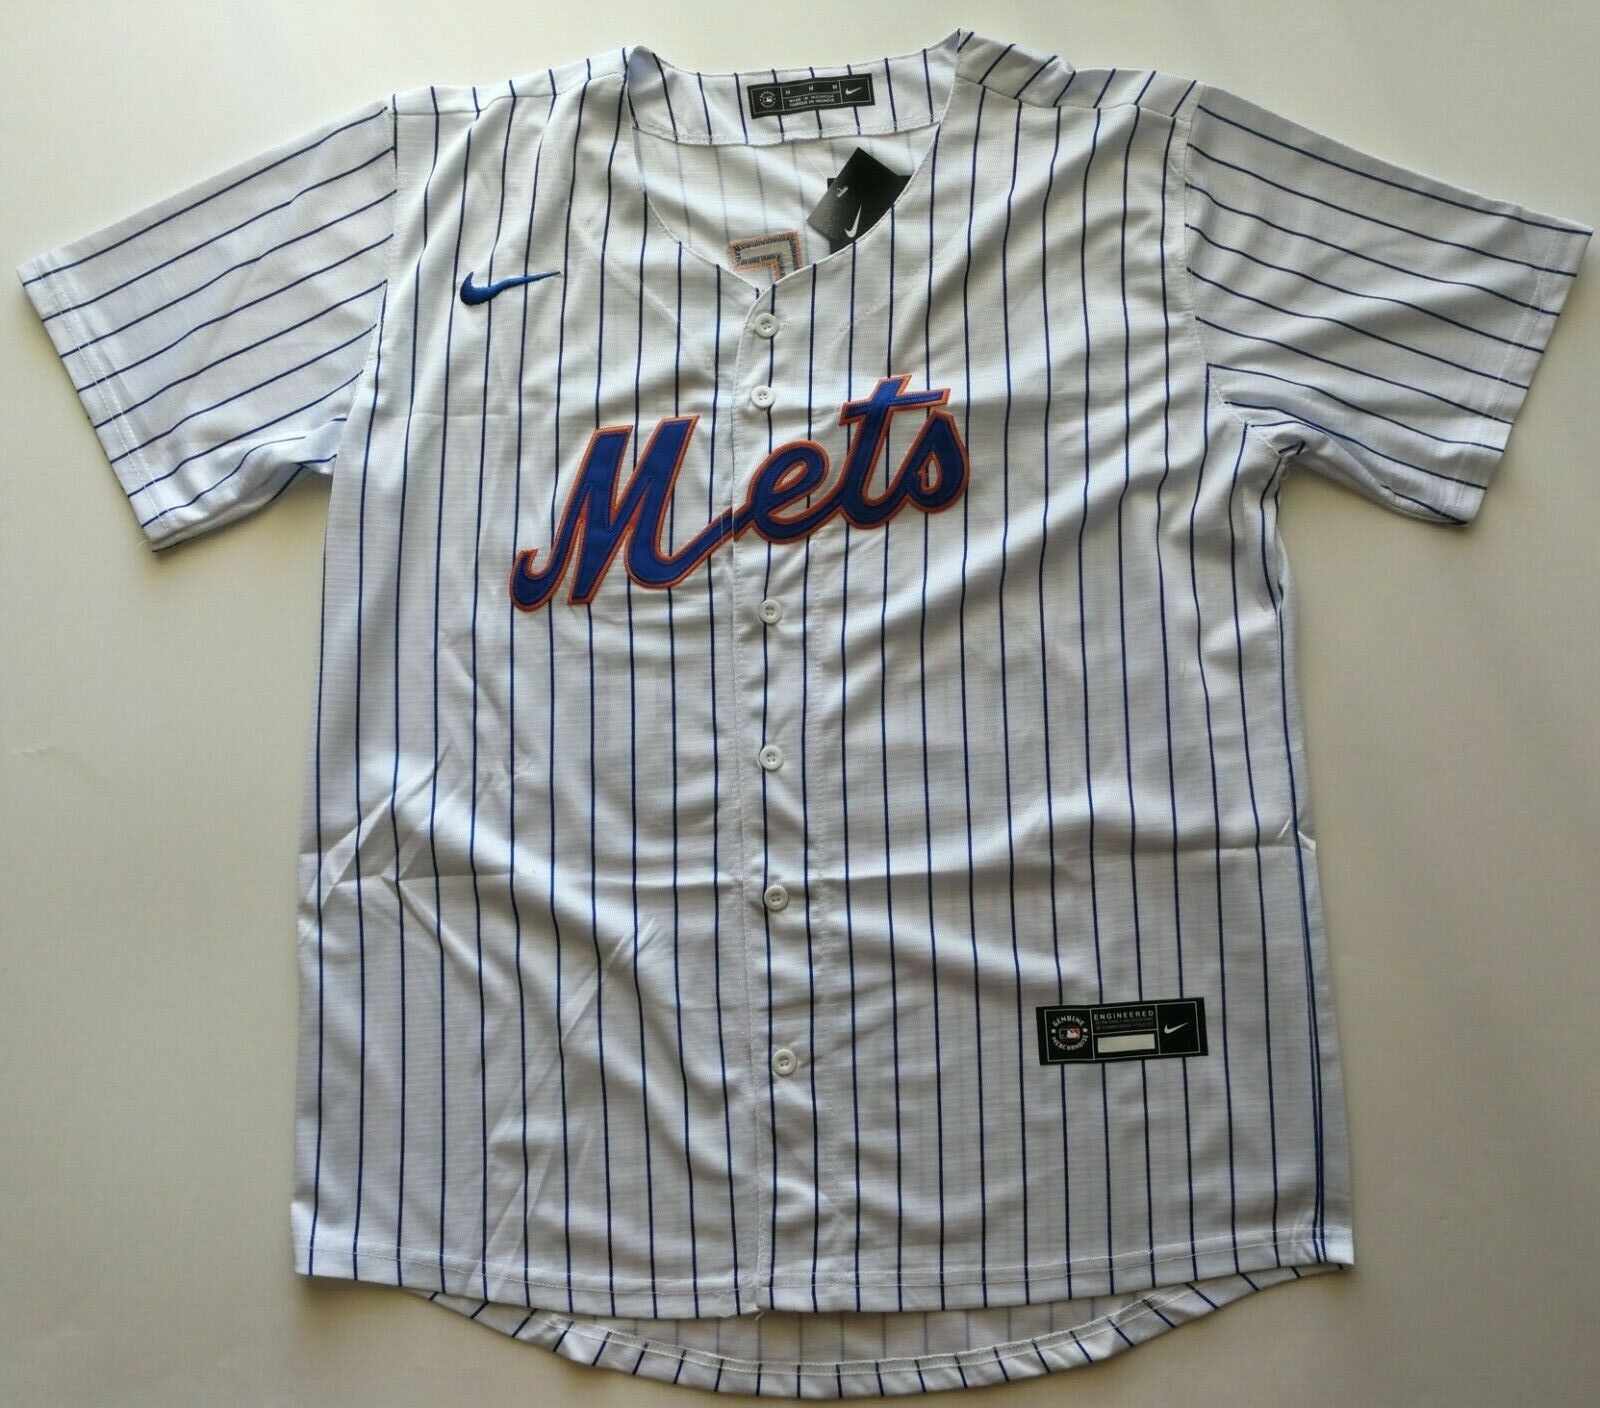 Javier Baez #23 New York Mets Baseball jersey Size L Free Shipping.